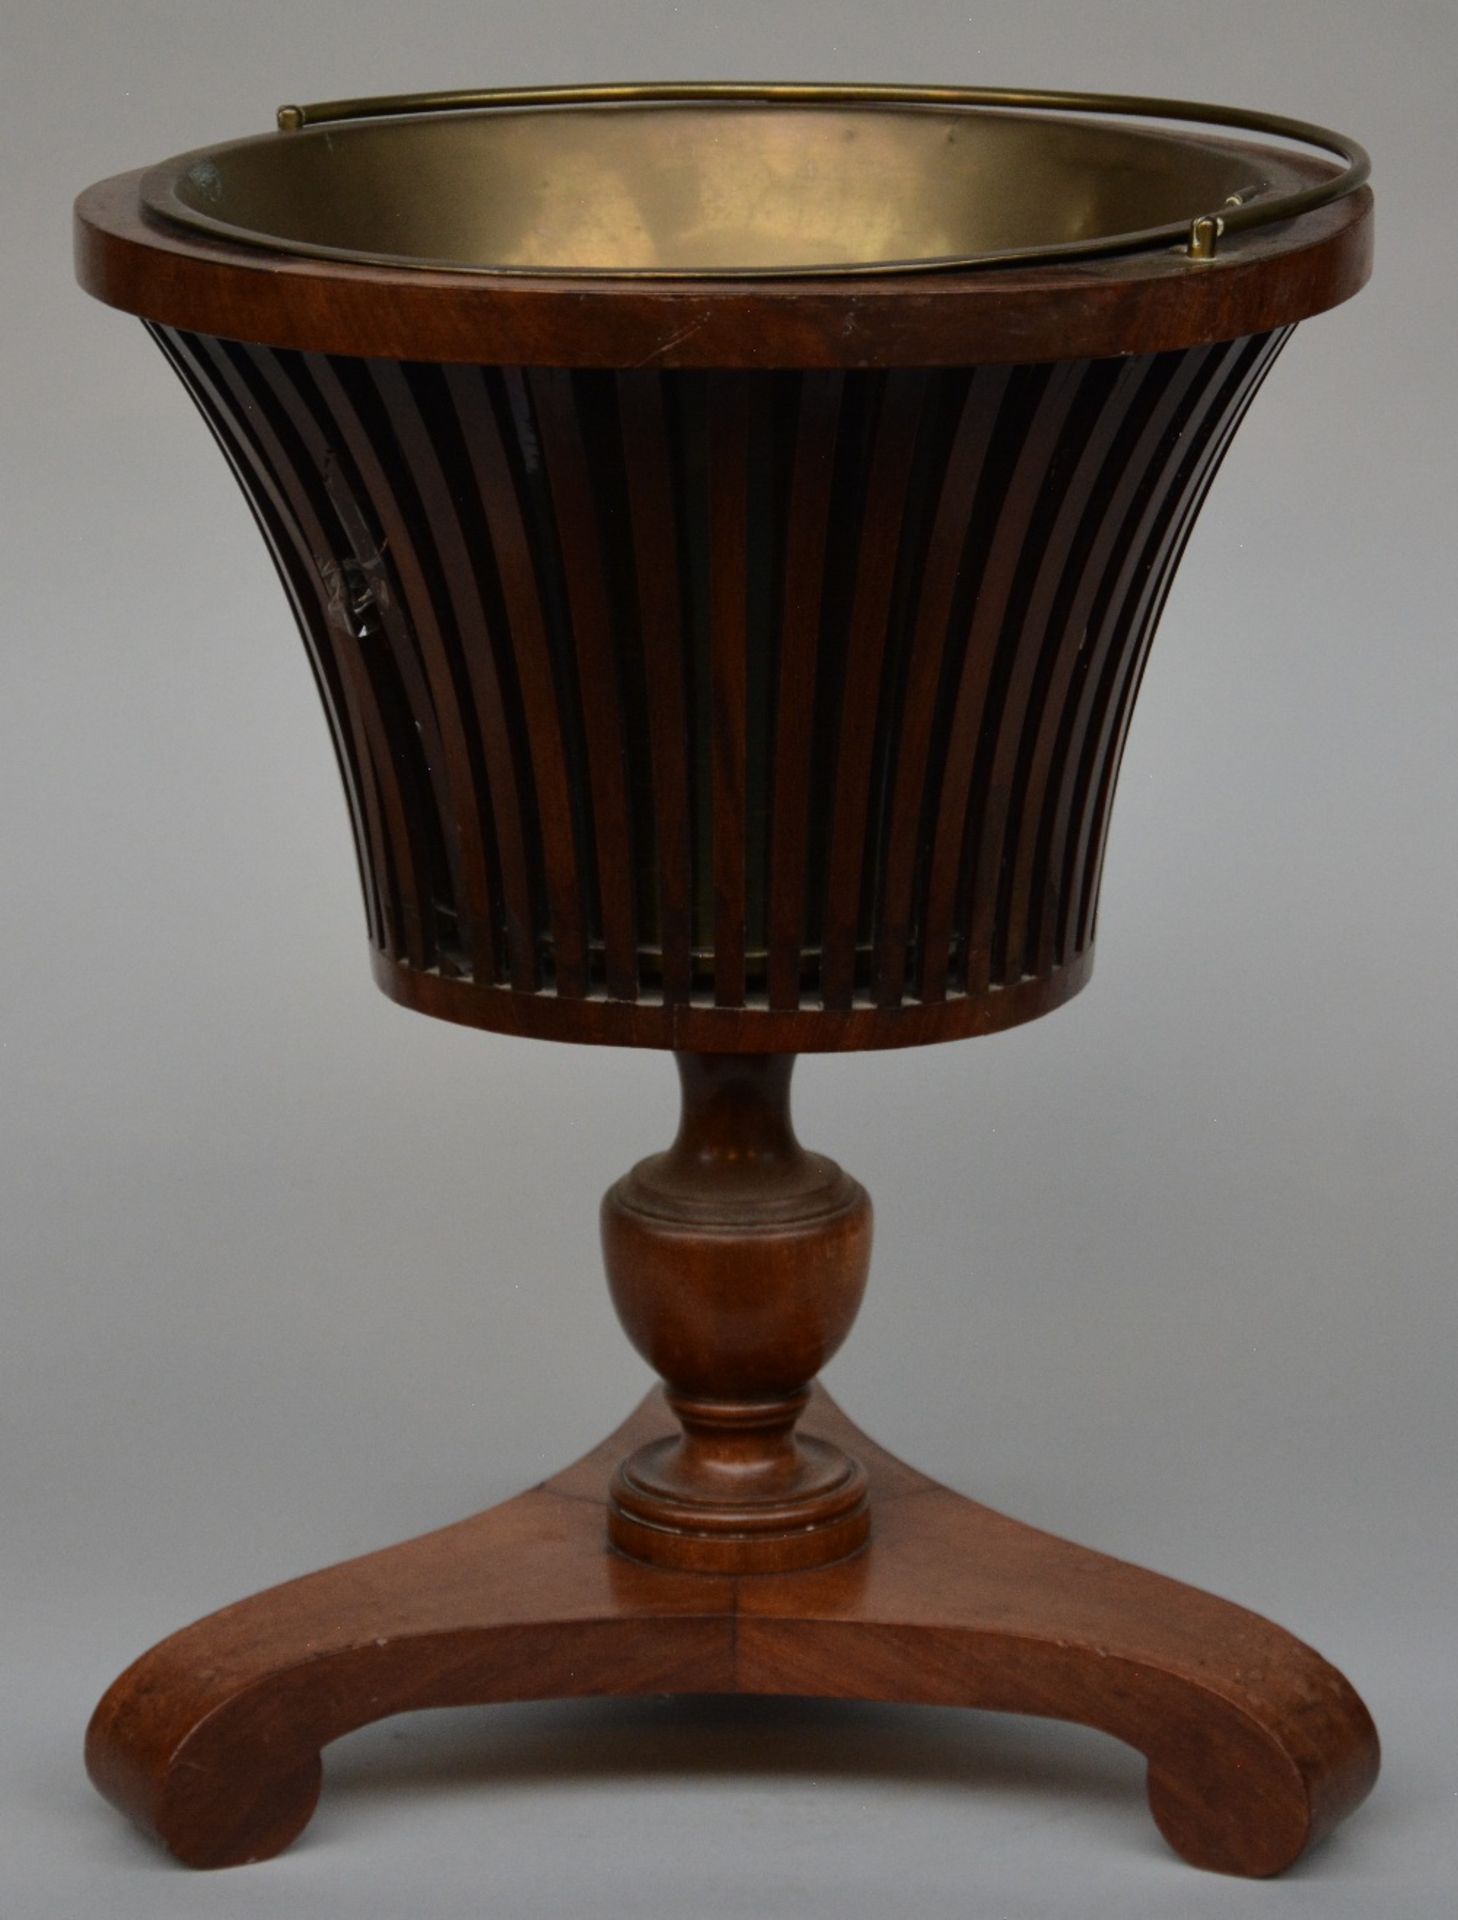 Mahogany and brass tea stove, 19thC, H 48 - Diameter 37,5 cm (minor damage)